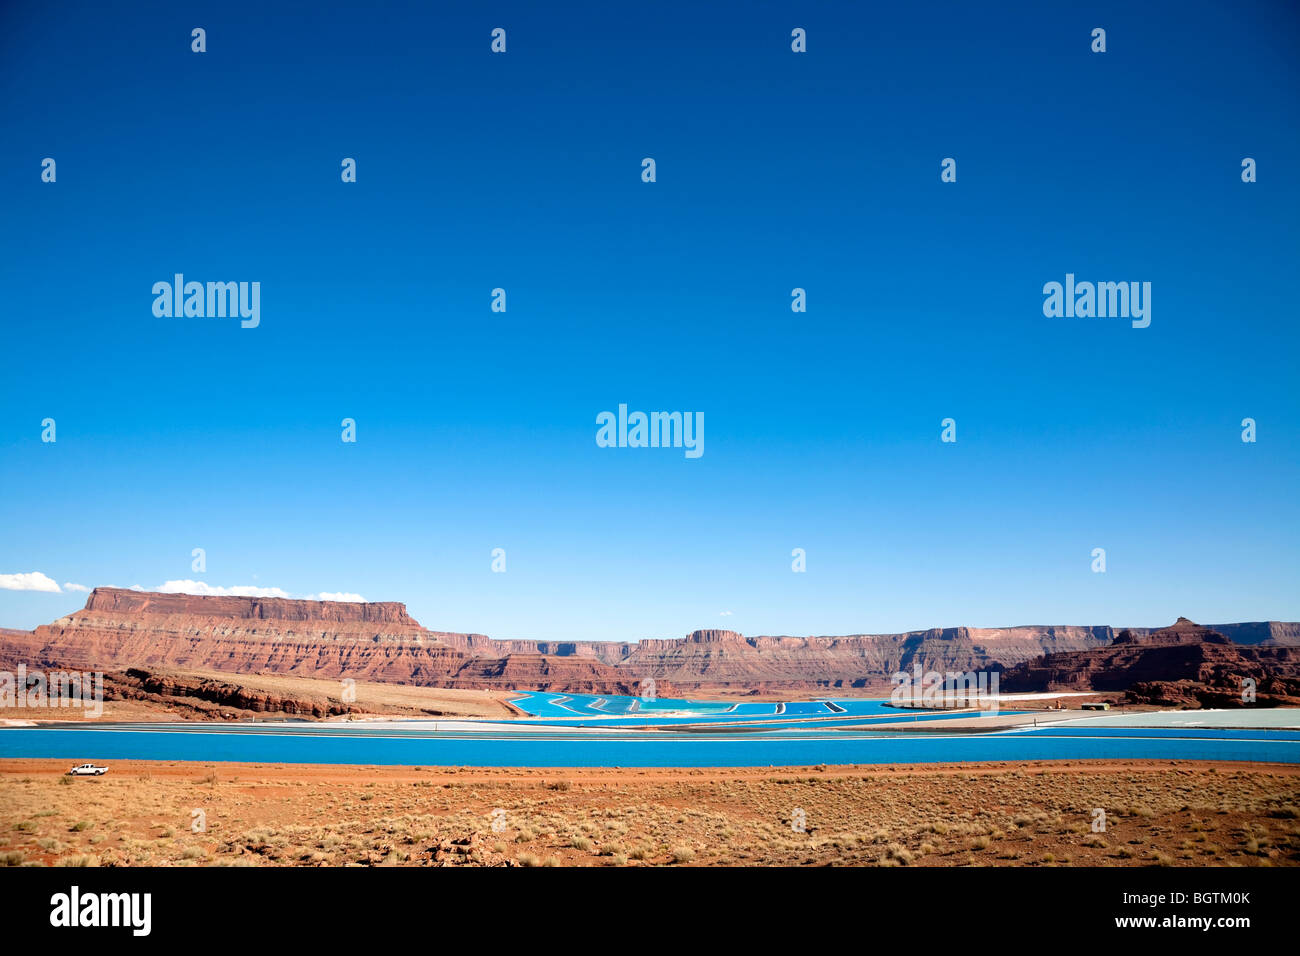 Scene overlooking the bight blue Cane Creek potash mine water evaporation ponds near Moab, Utah, USA Stock Photo